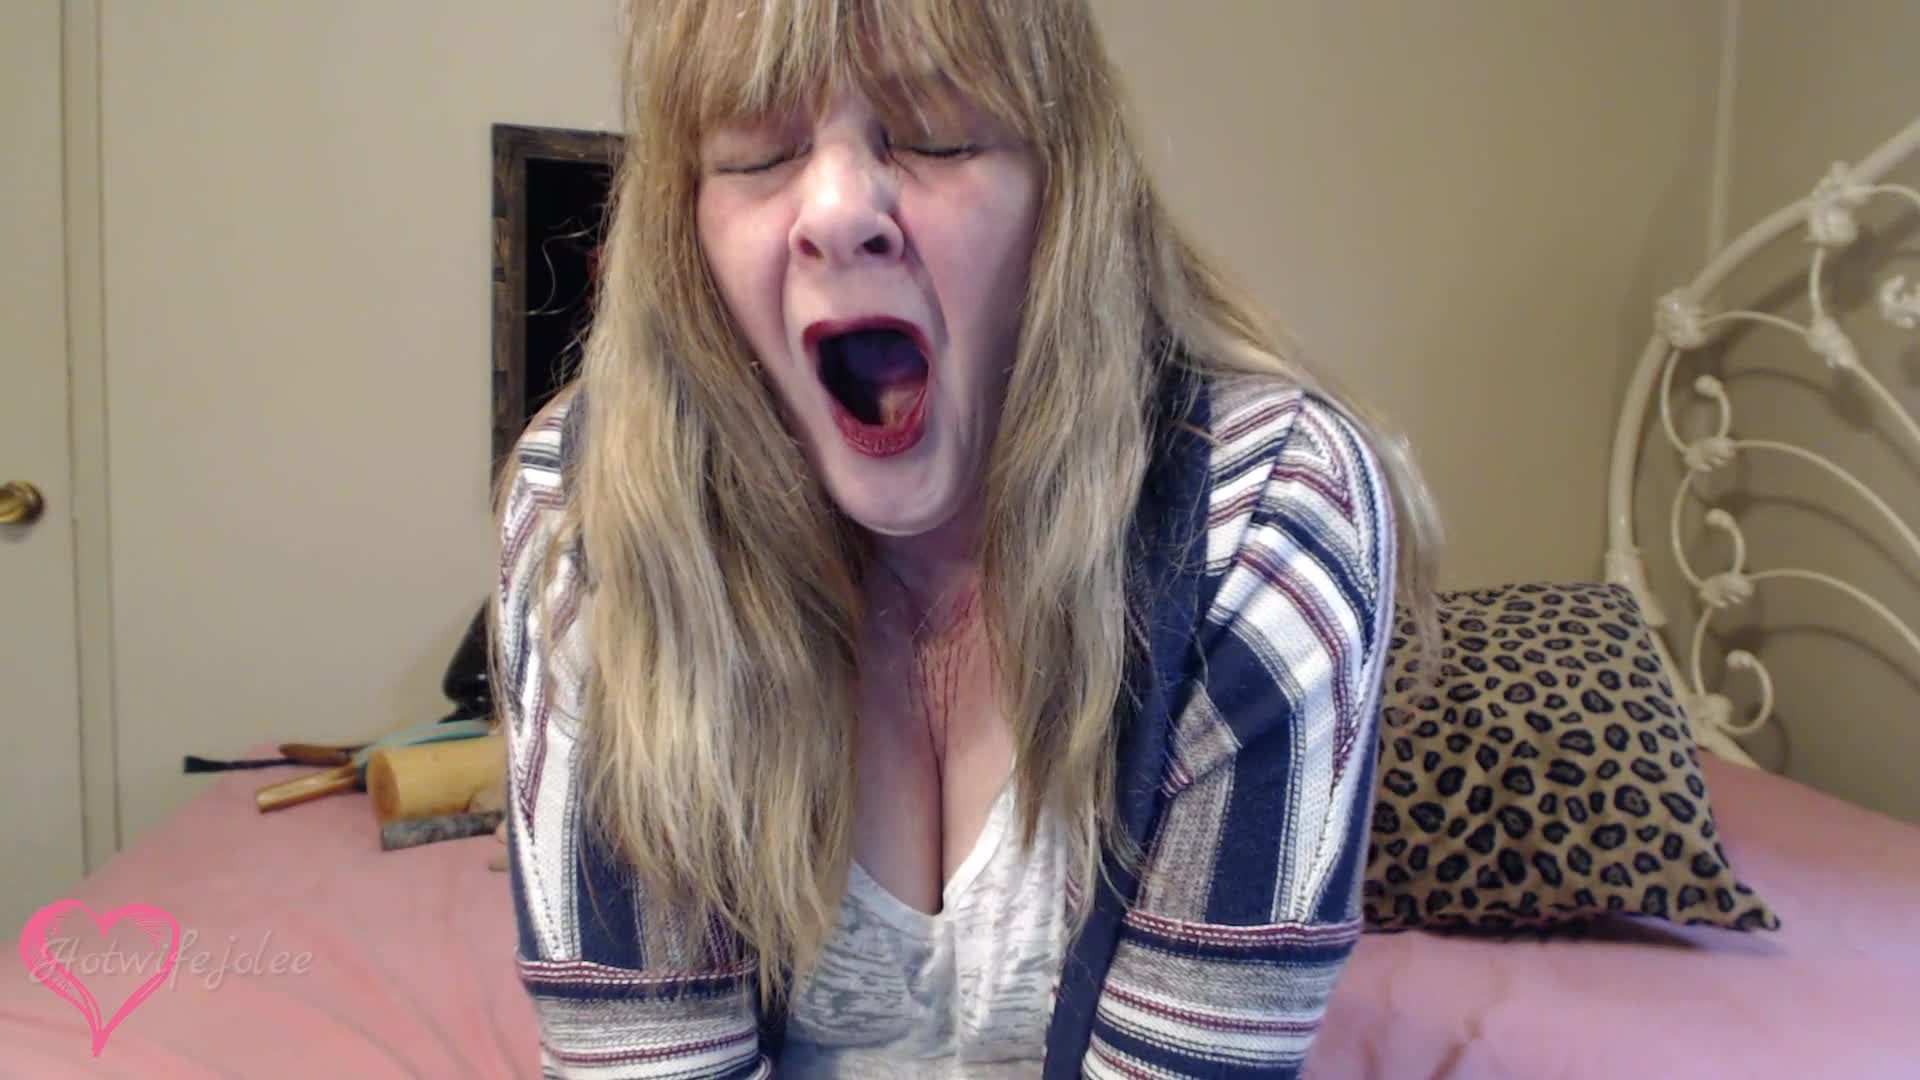 My First Sleepy Yawning video